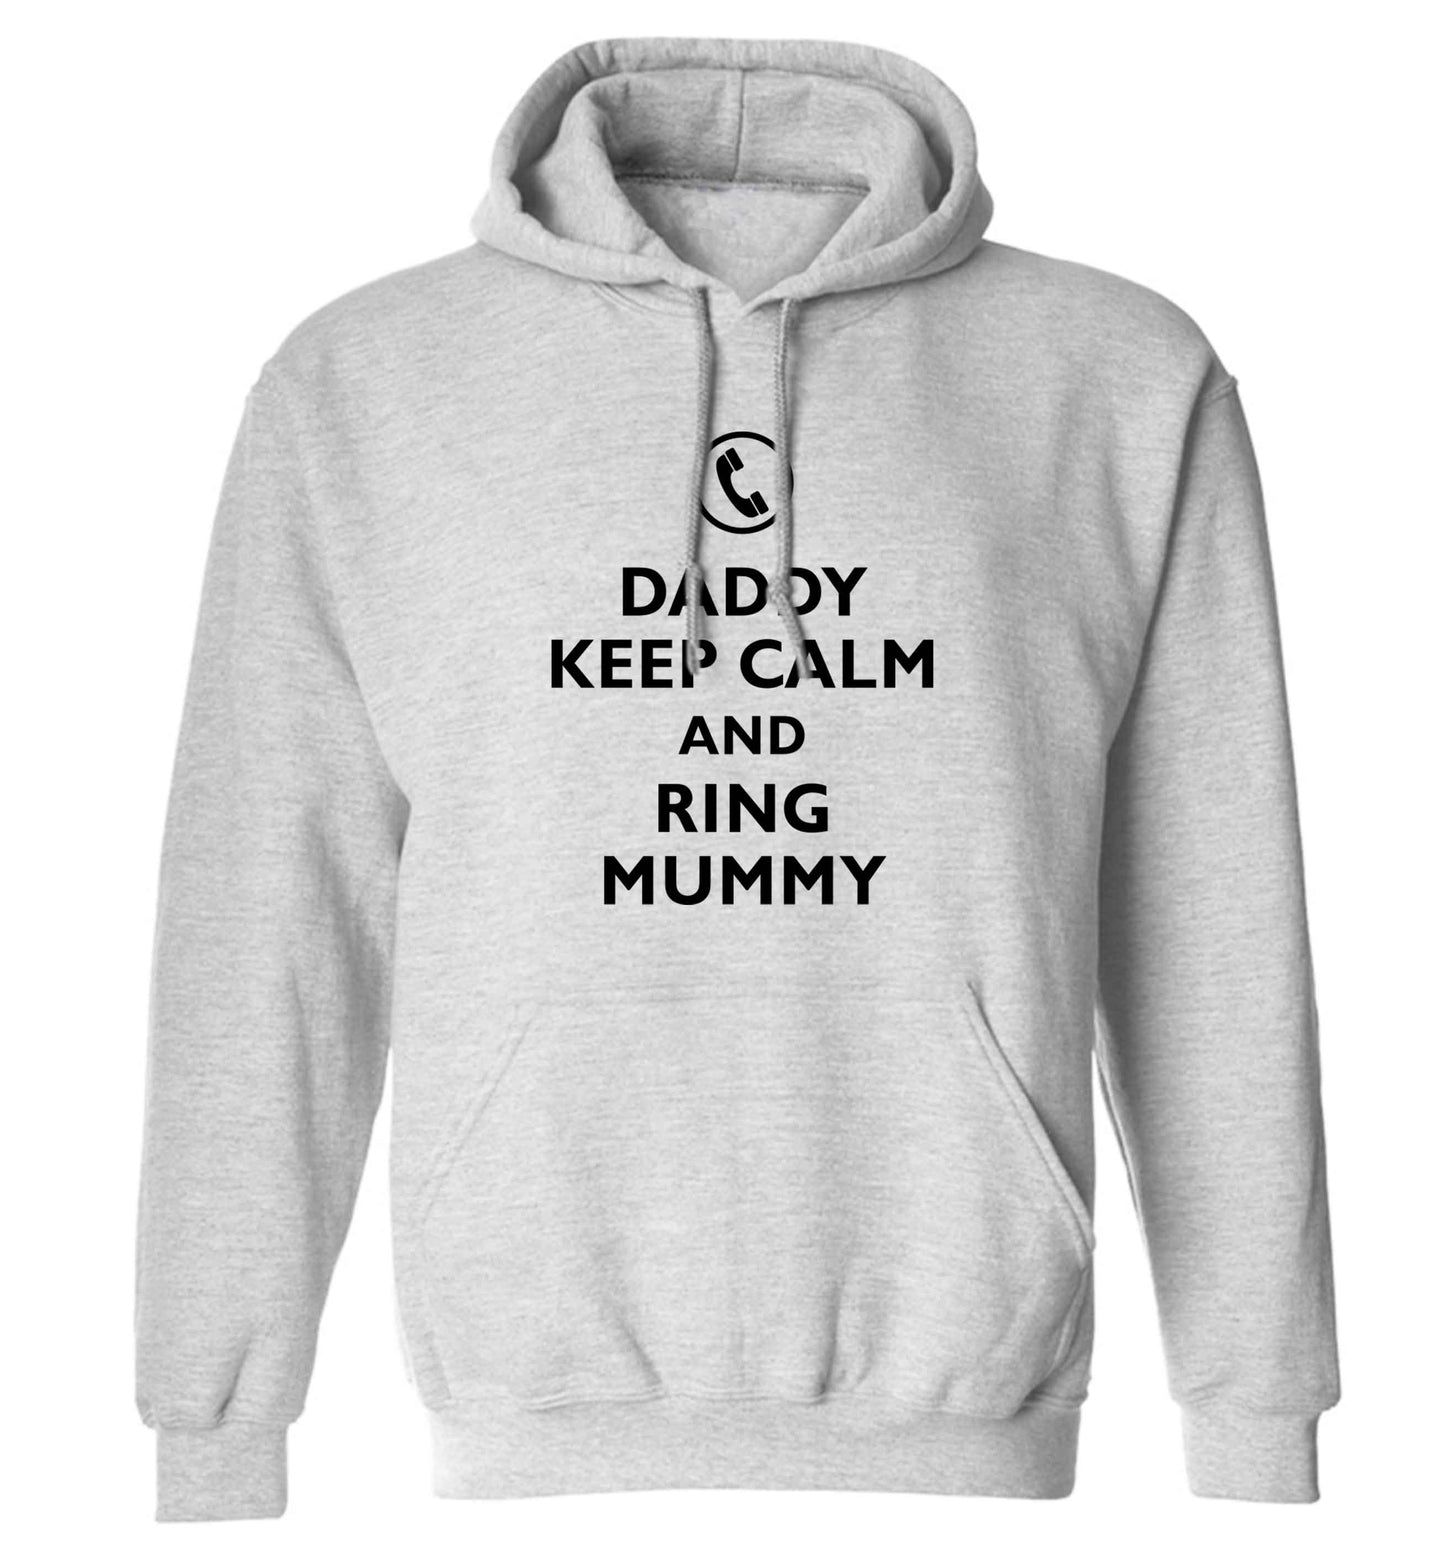 Daddy keep calm and ring mummy adults unisex grey hoodie 2XL